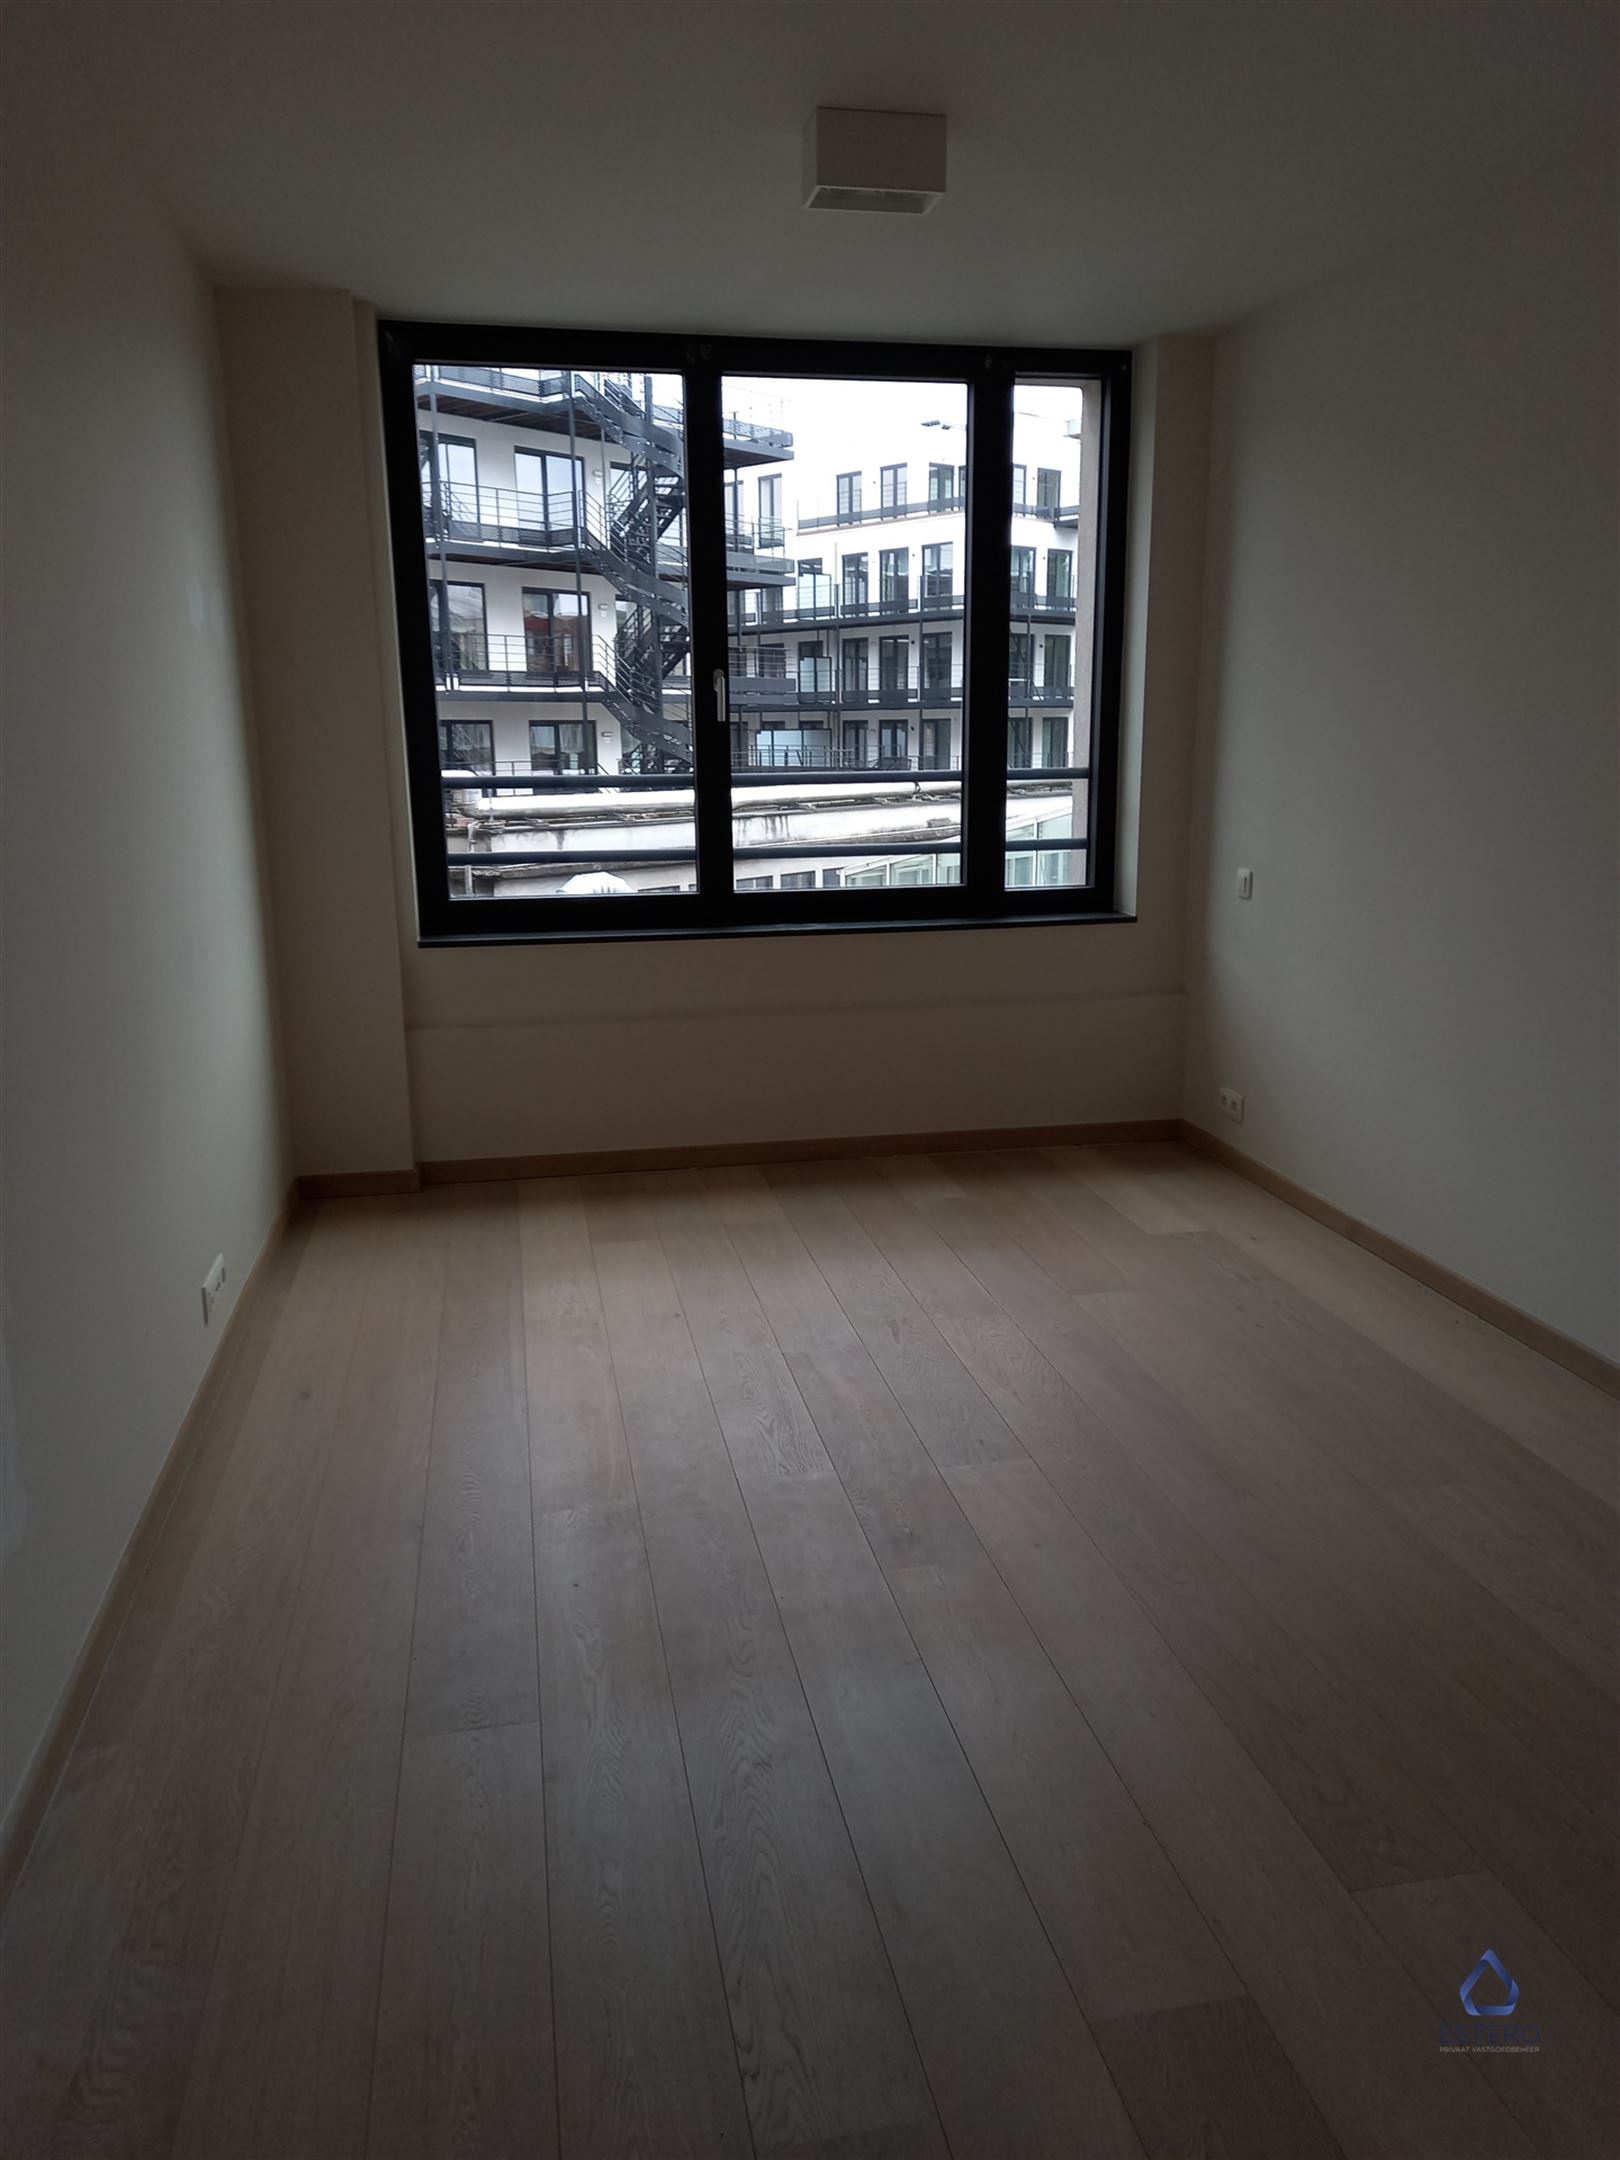 Modern appartement met terras in hartje Brussel. 	 foto 7